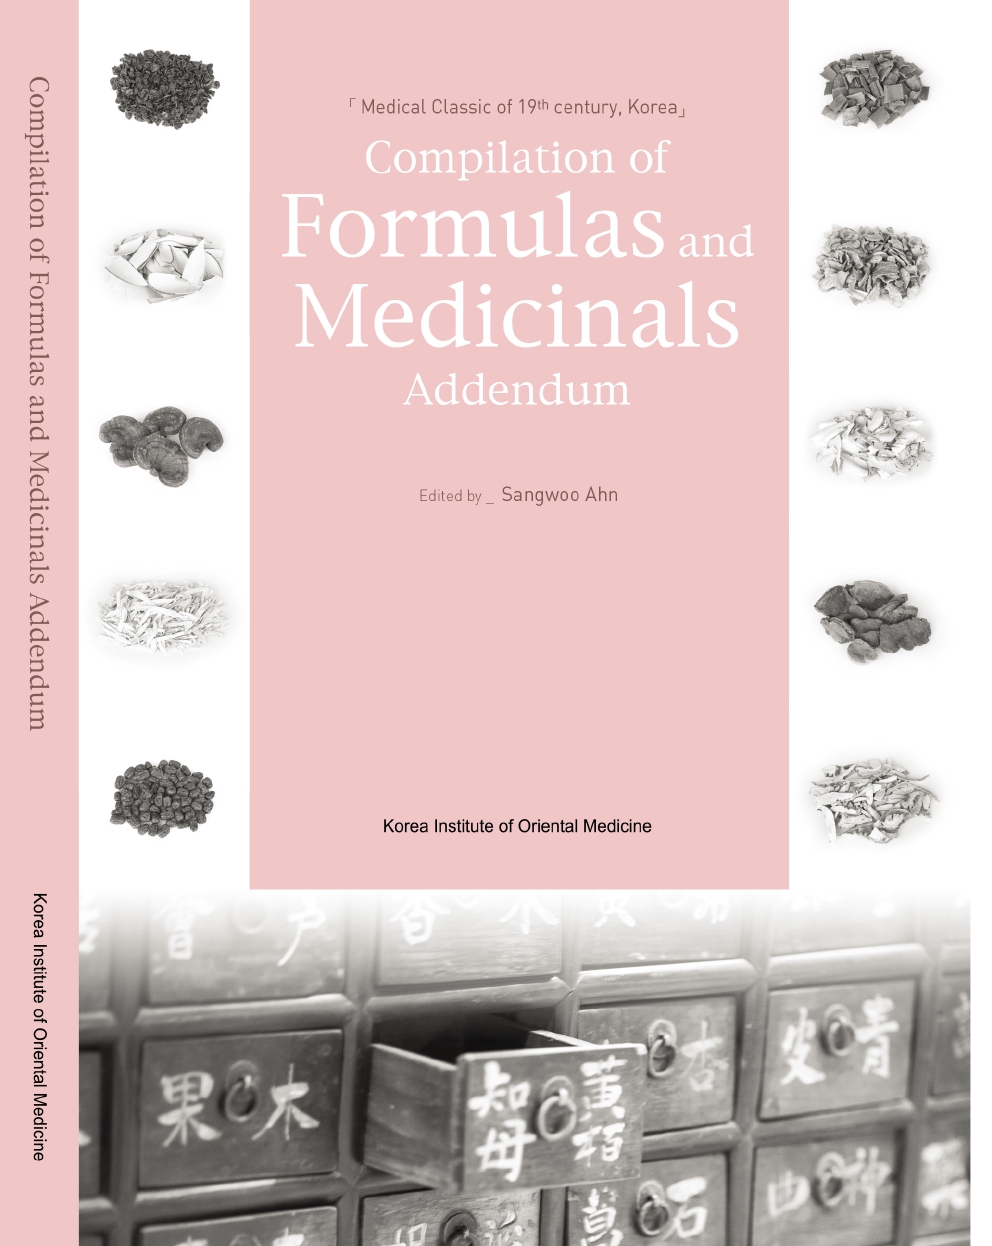 2. Introduction to Korean Medicine - Russian Version